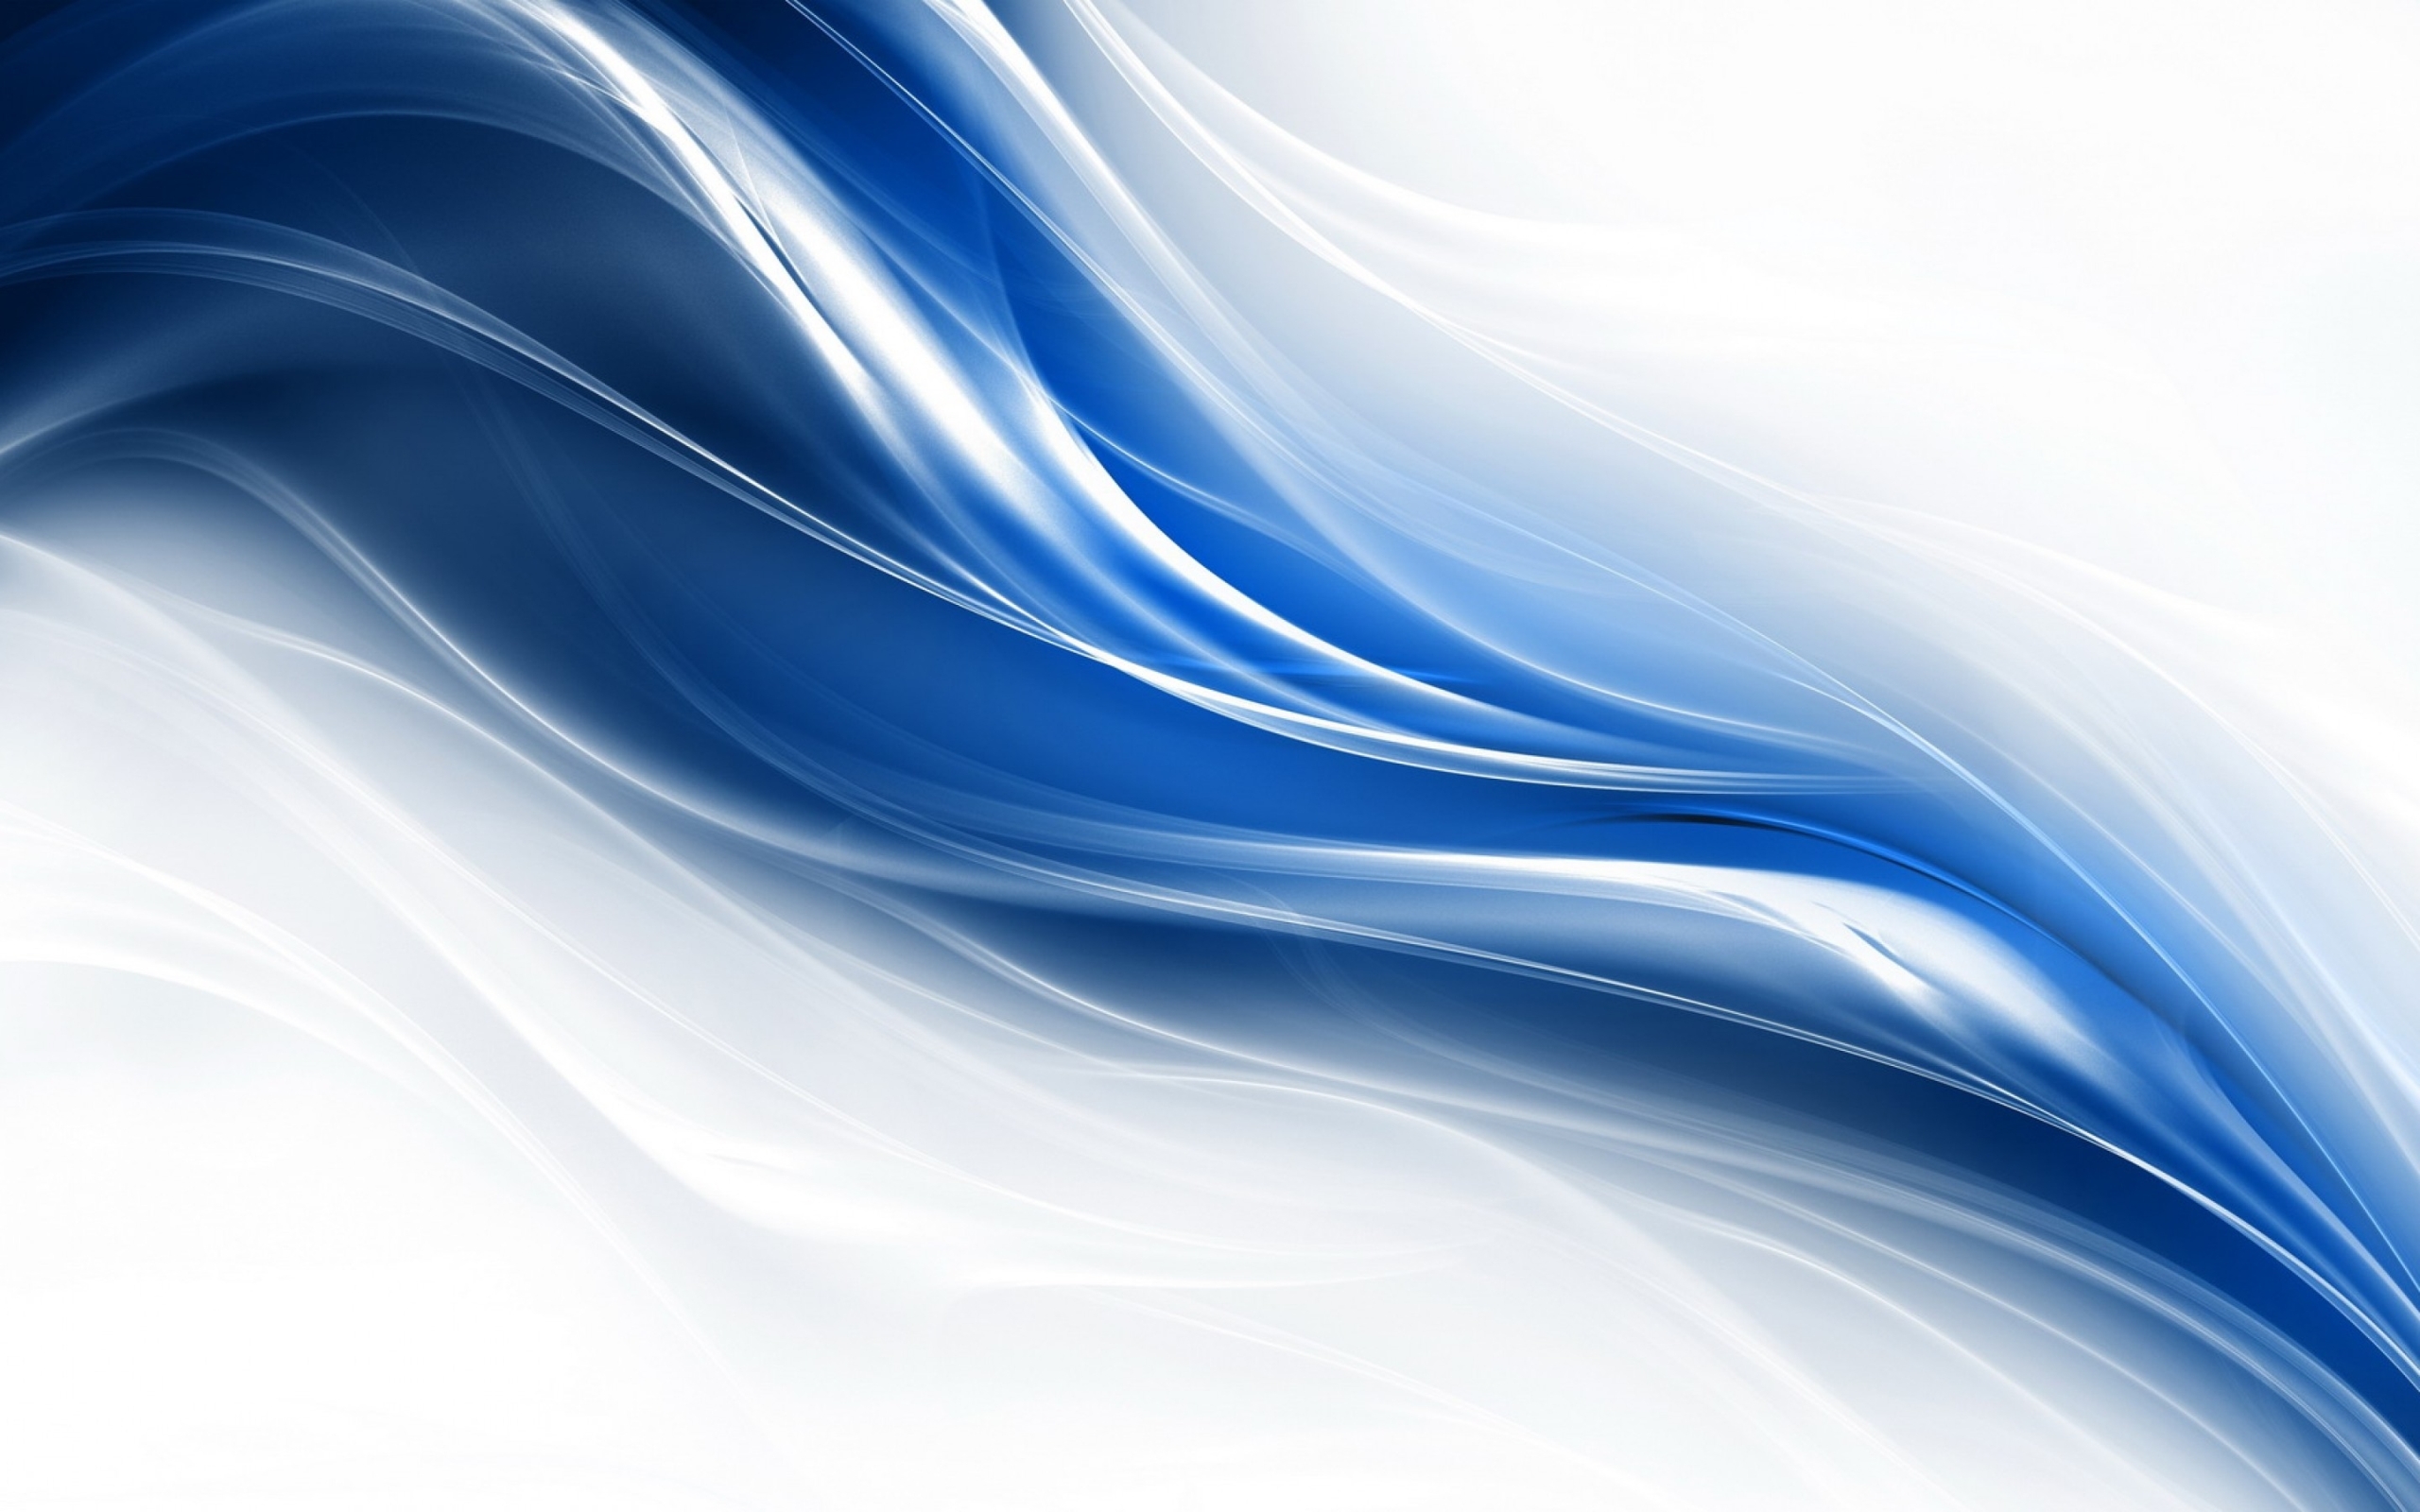 Line Curves Azure Mac Wallpaper Download | Free Mac Wallpapers ...